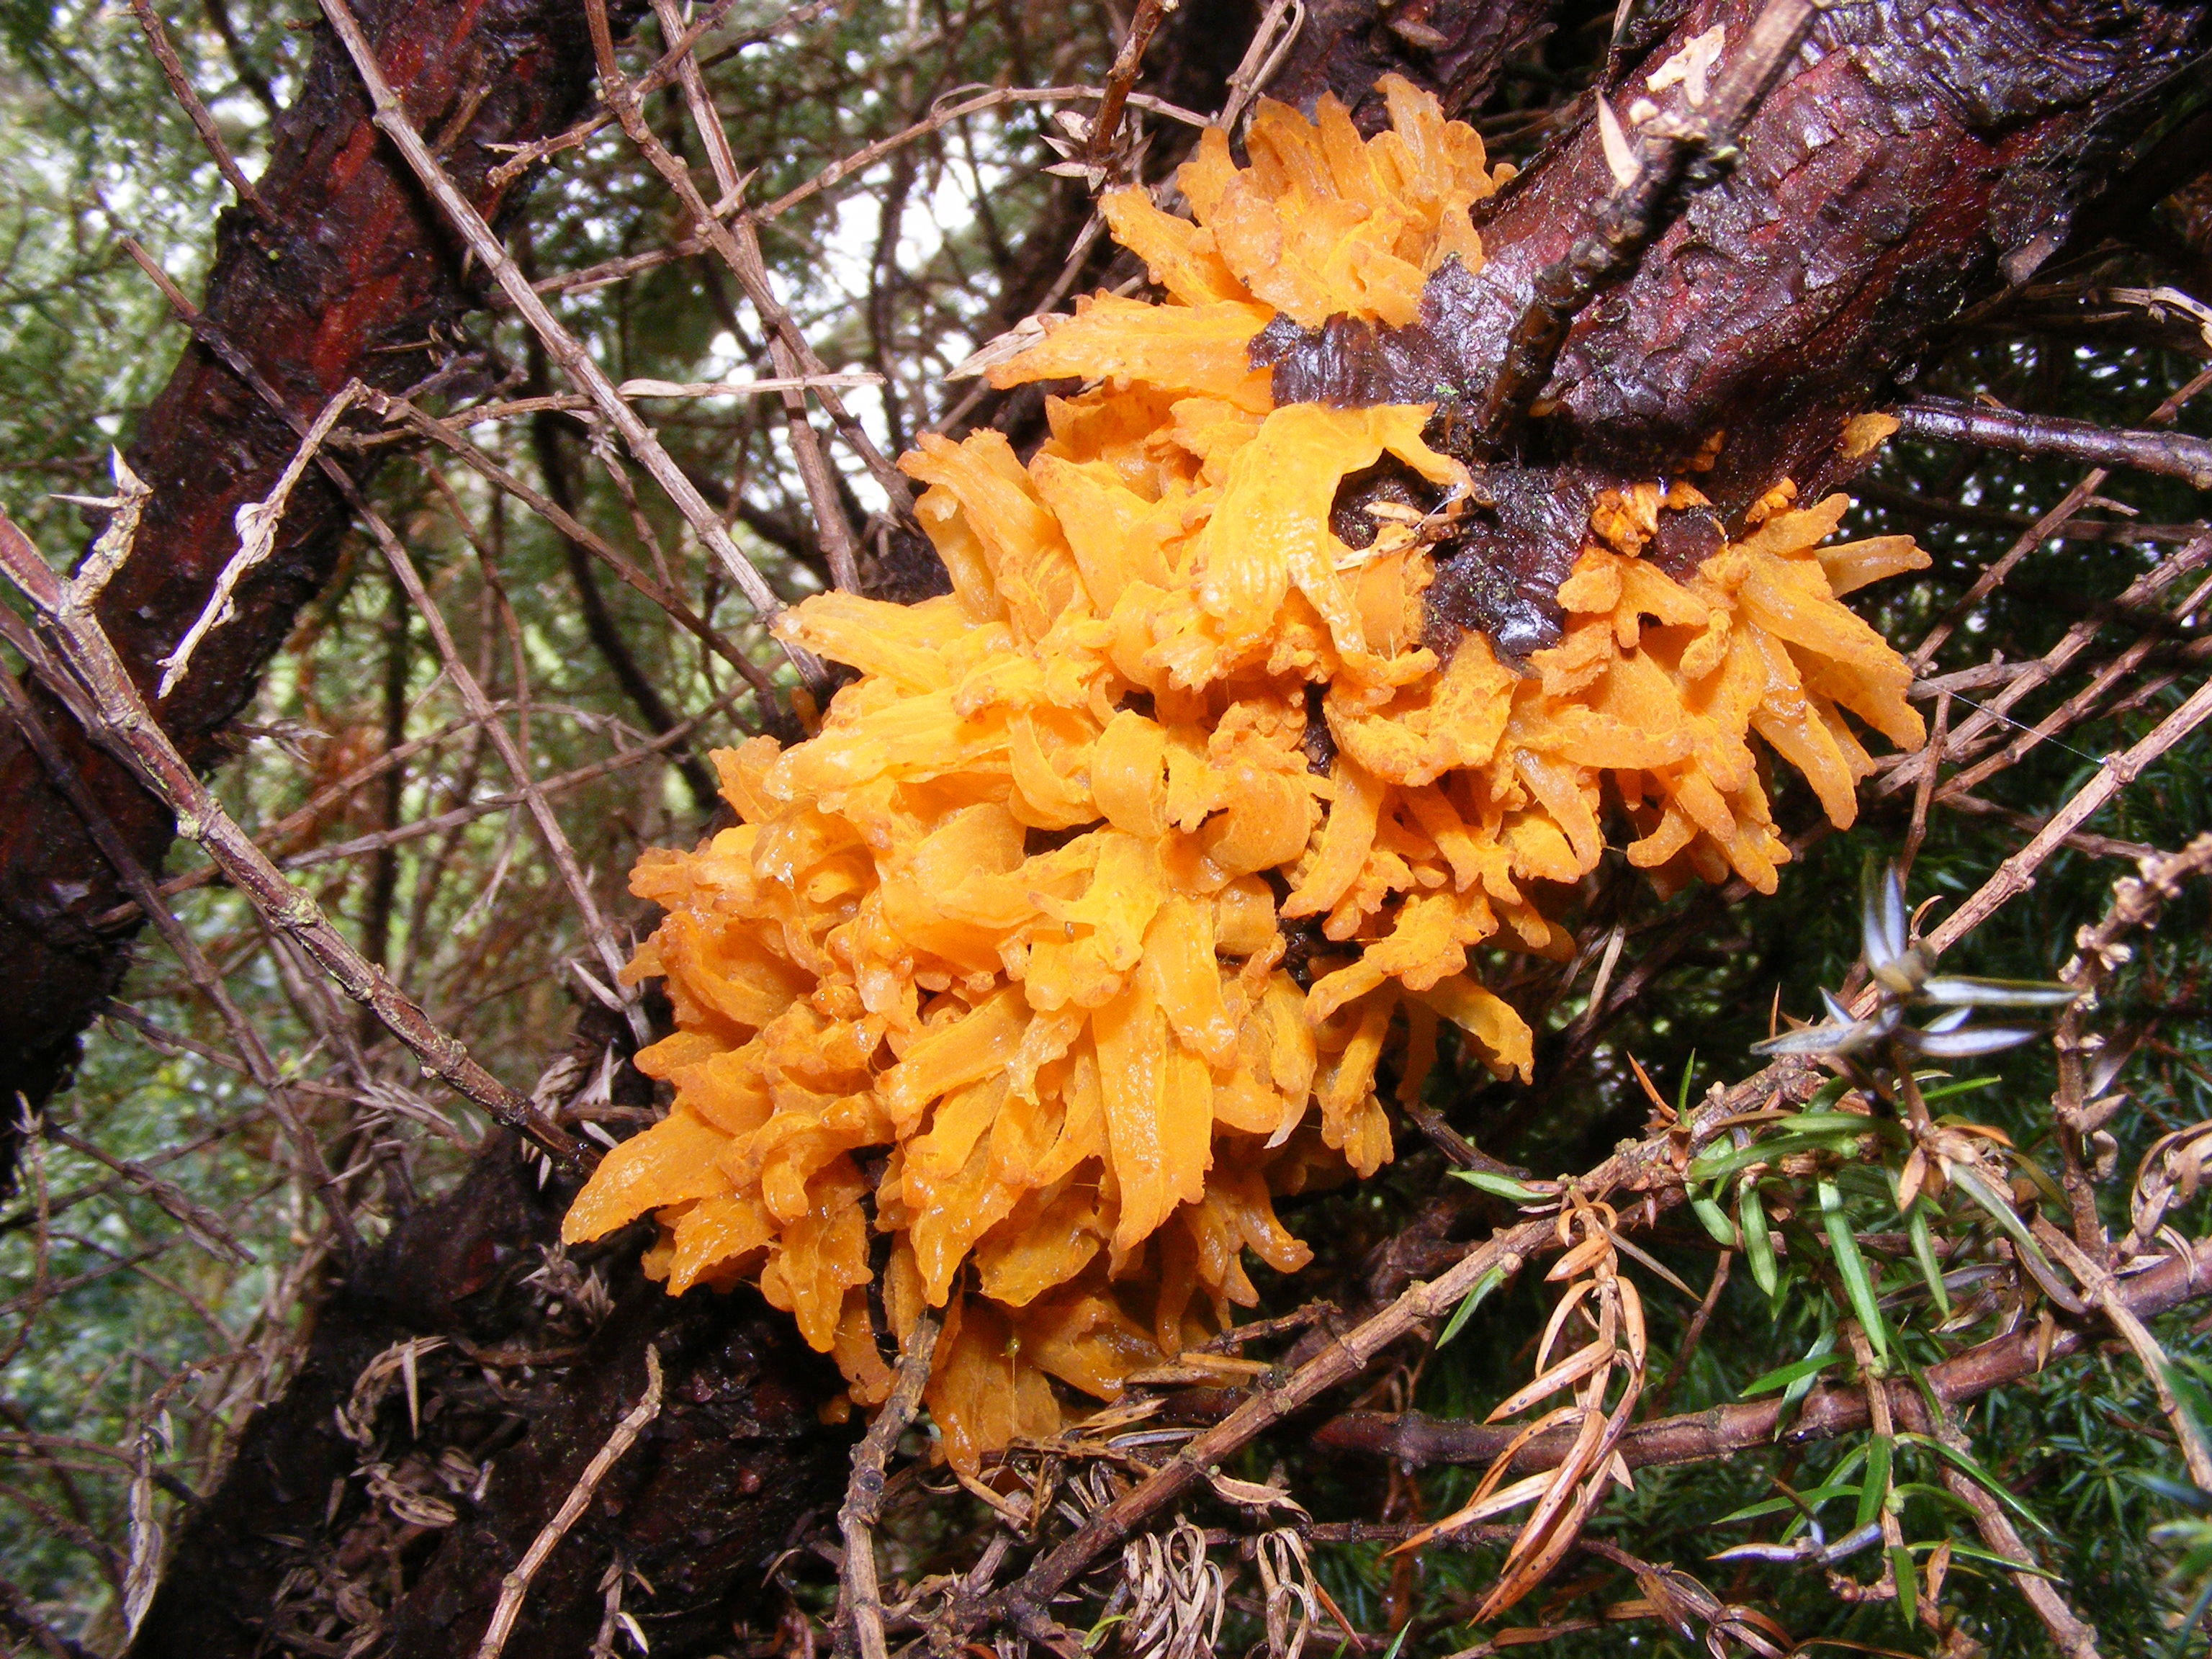 Gymnosporangium sabinae (Fungi and Lichens) by Graeme on.